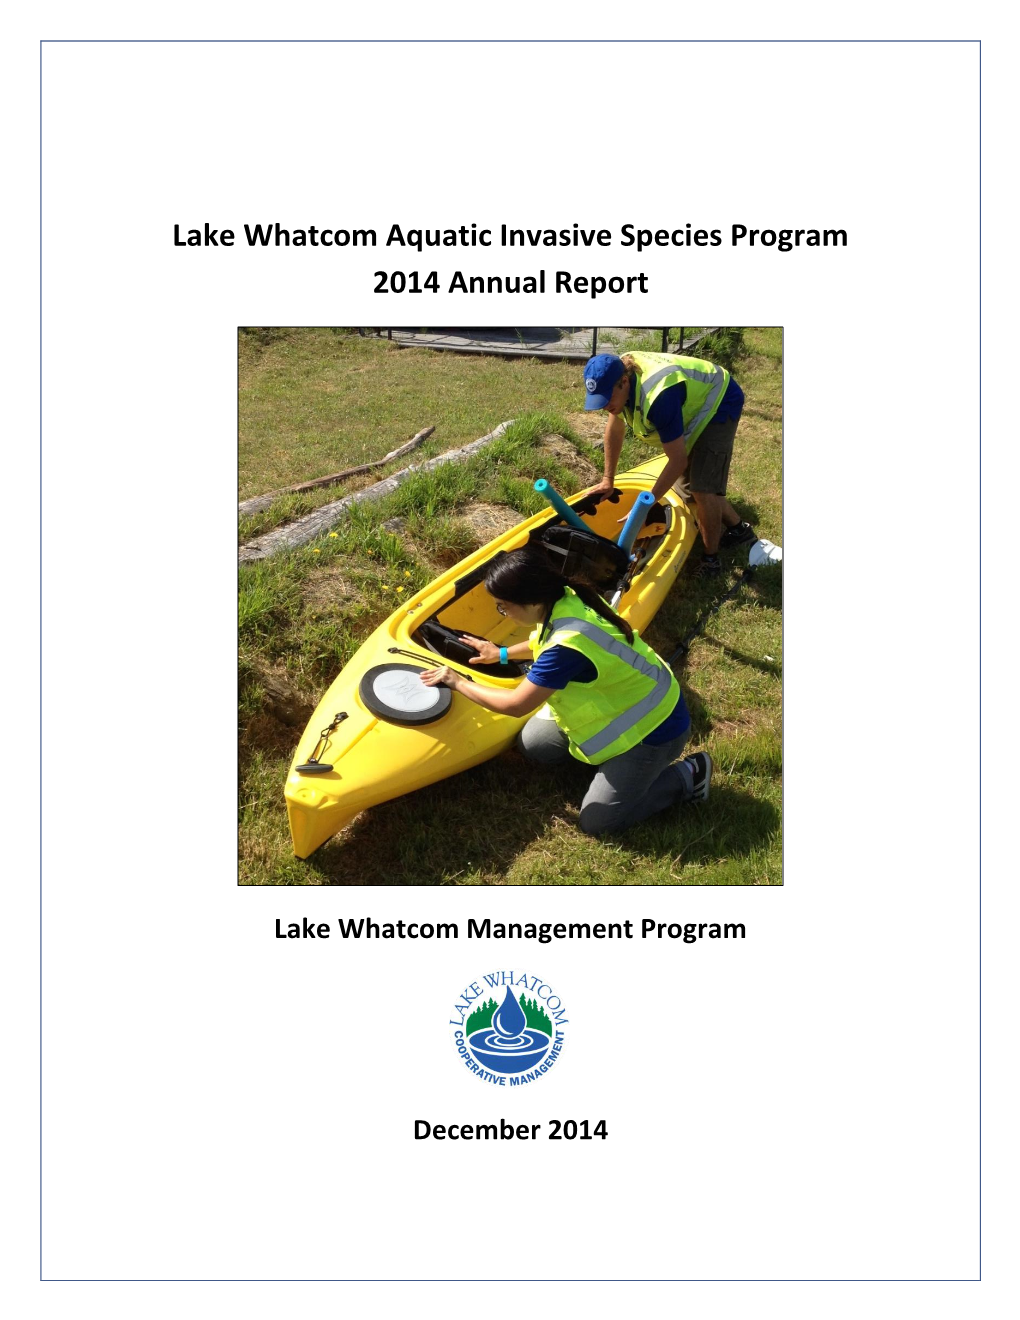 LWMP AIS Report 2014